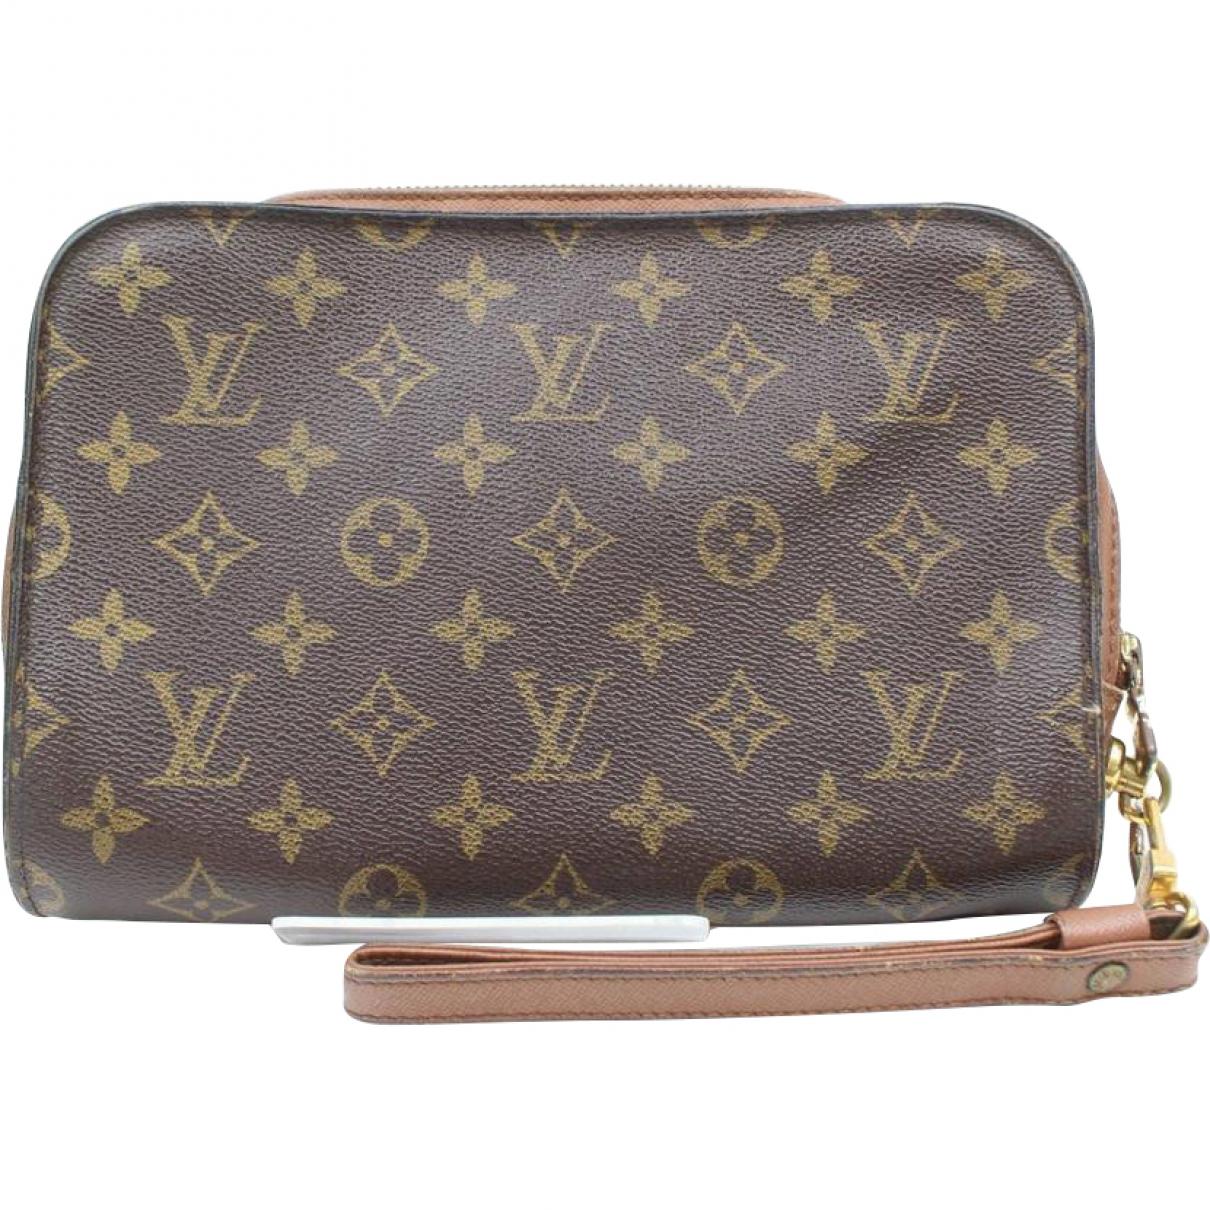 Lyst - Louis Vuitton Vintage Brown Cloth Clutch Bag in Brown